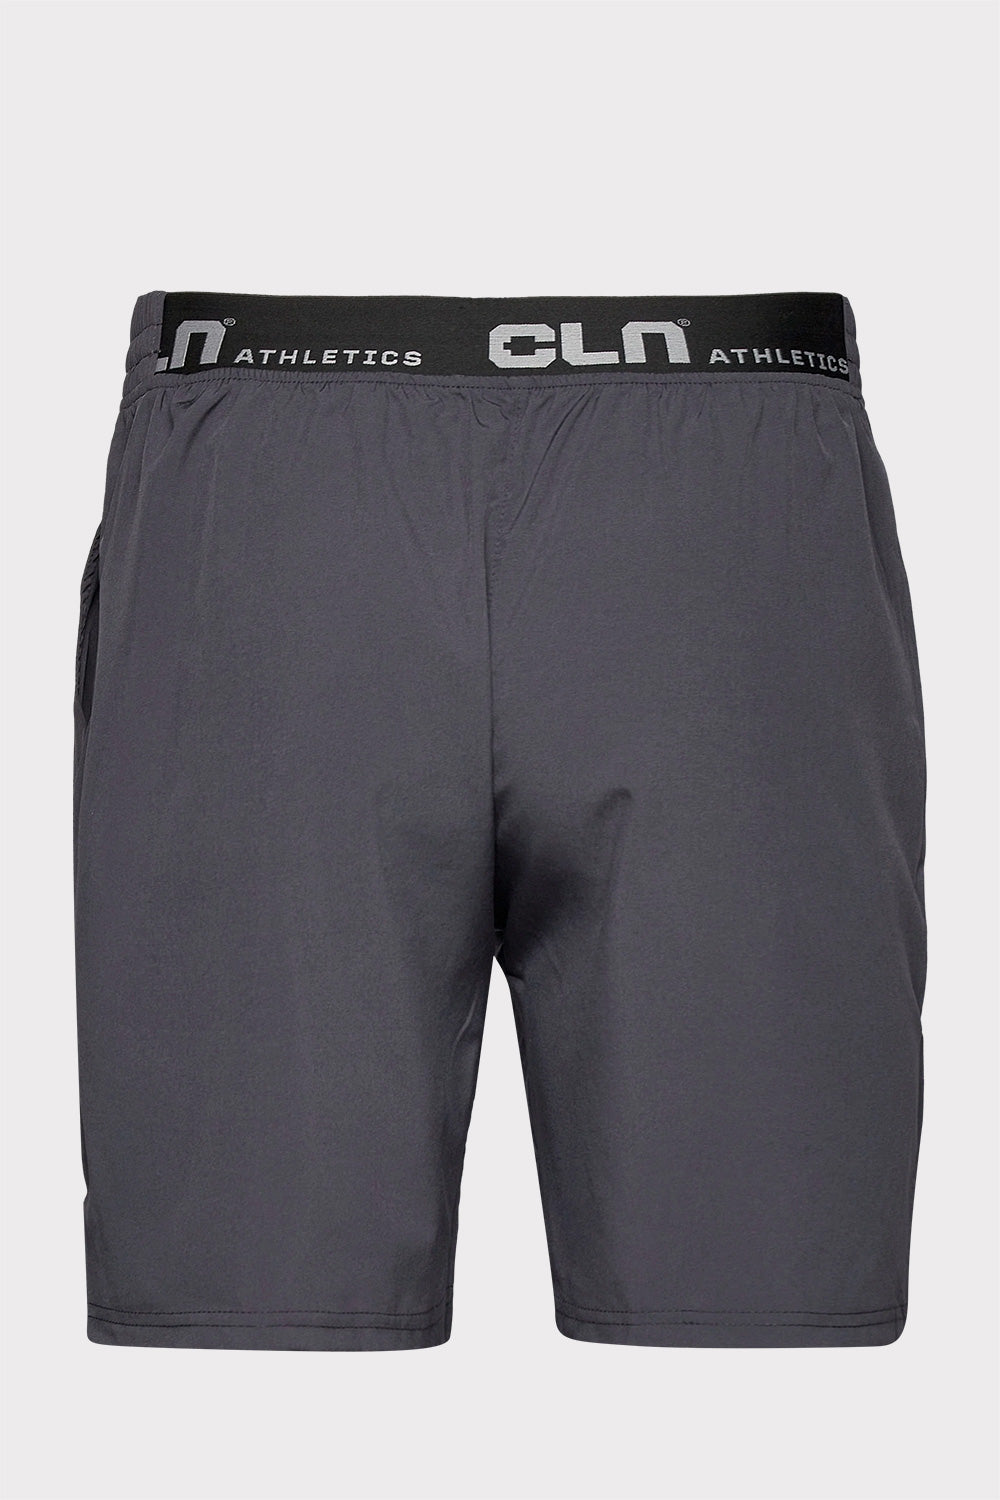 CLN Transform Shorts - Grafitt